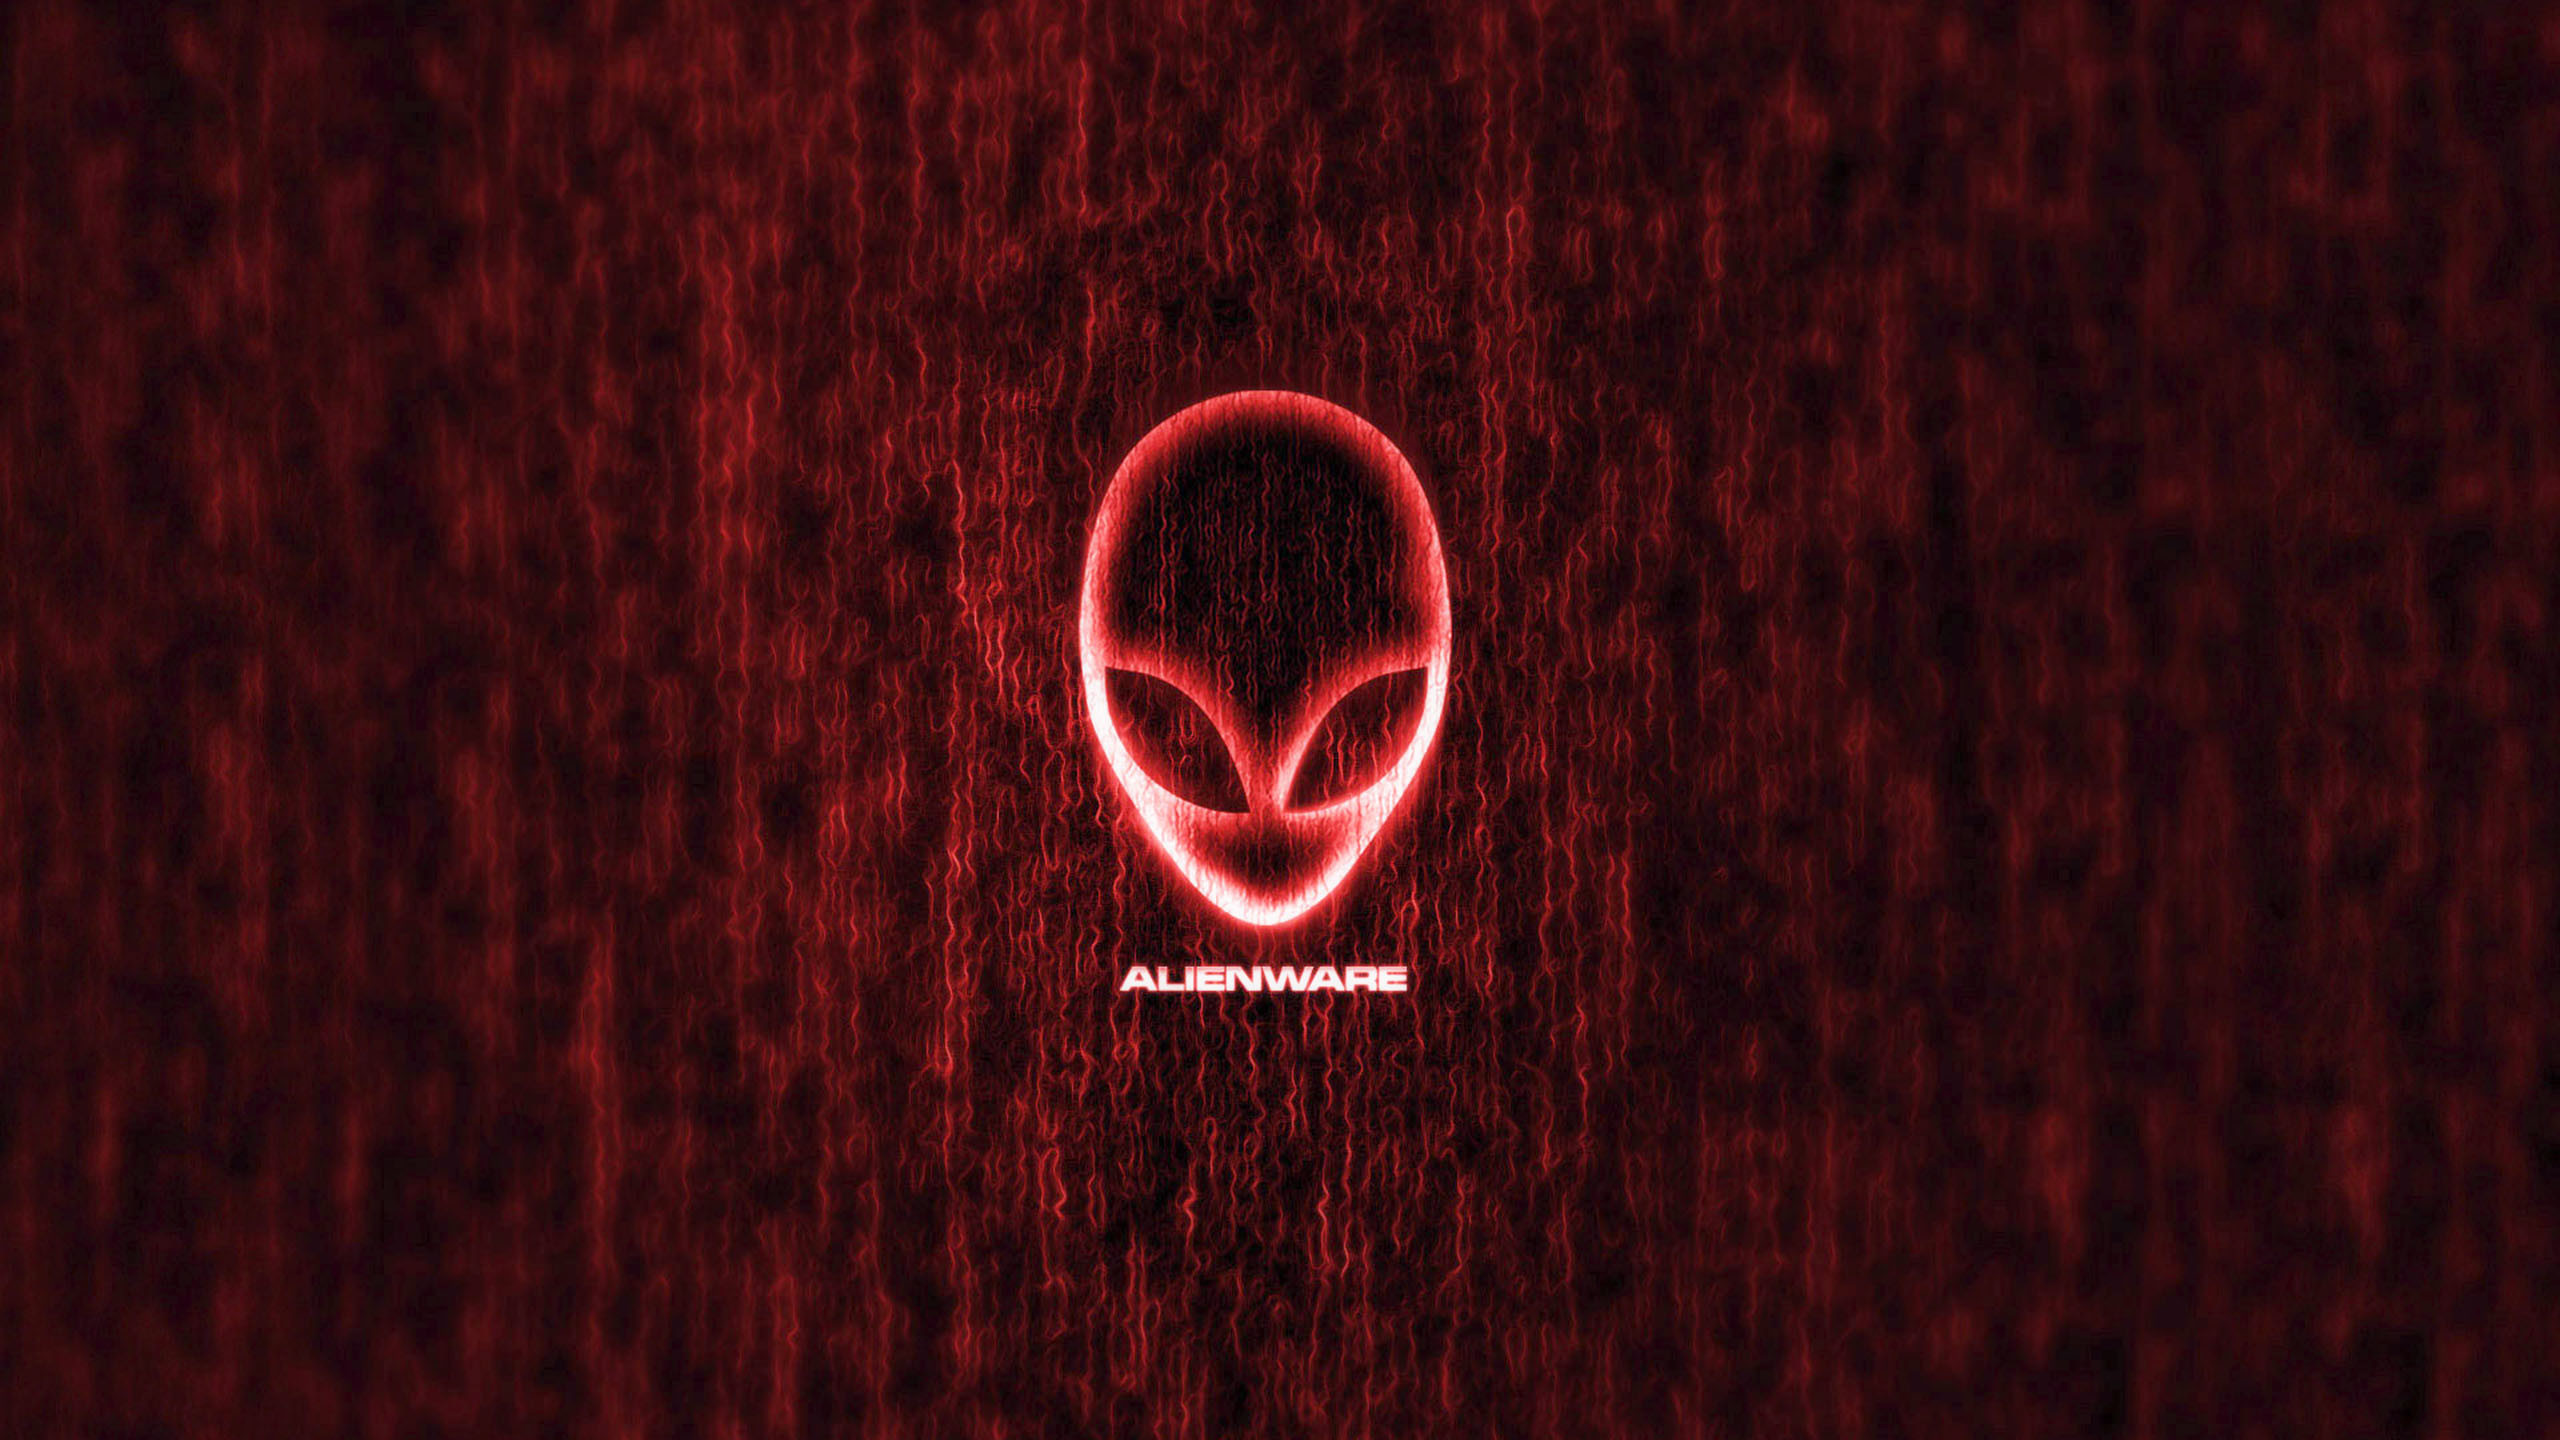 download alien trilogy pc windows 10